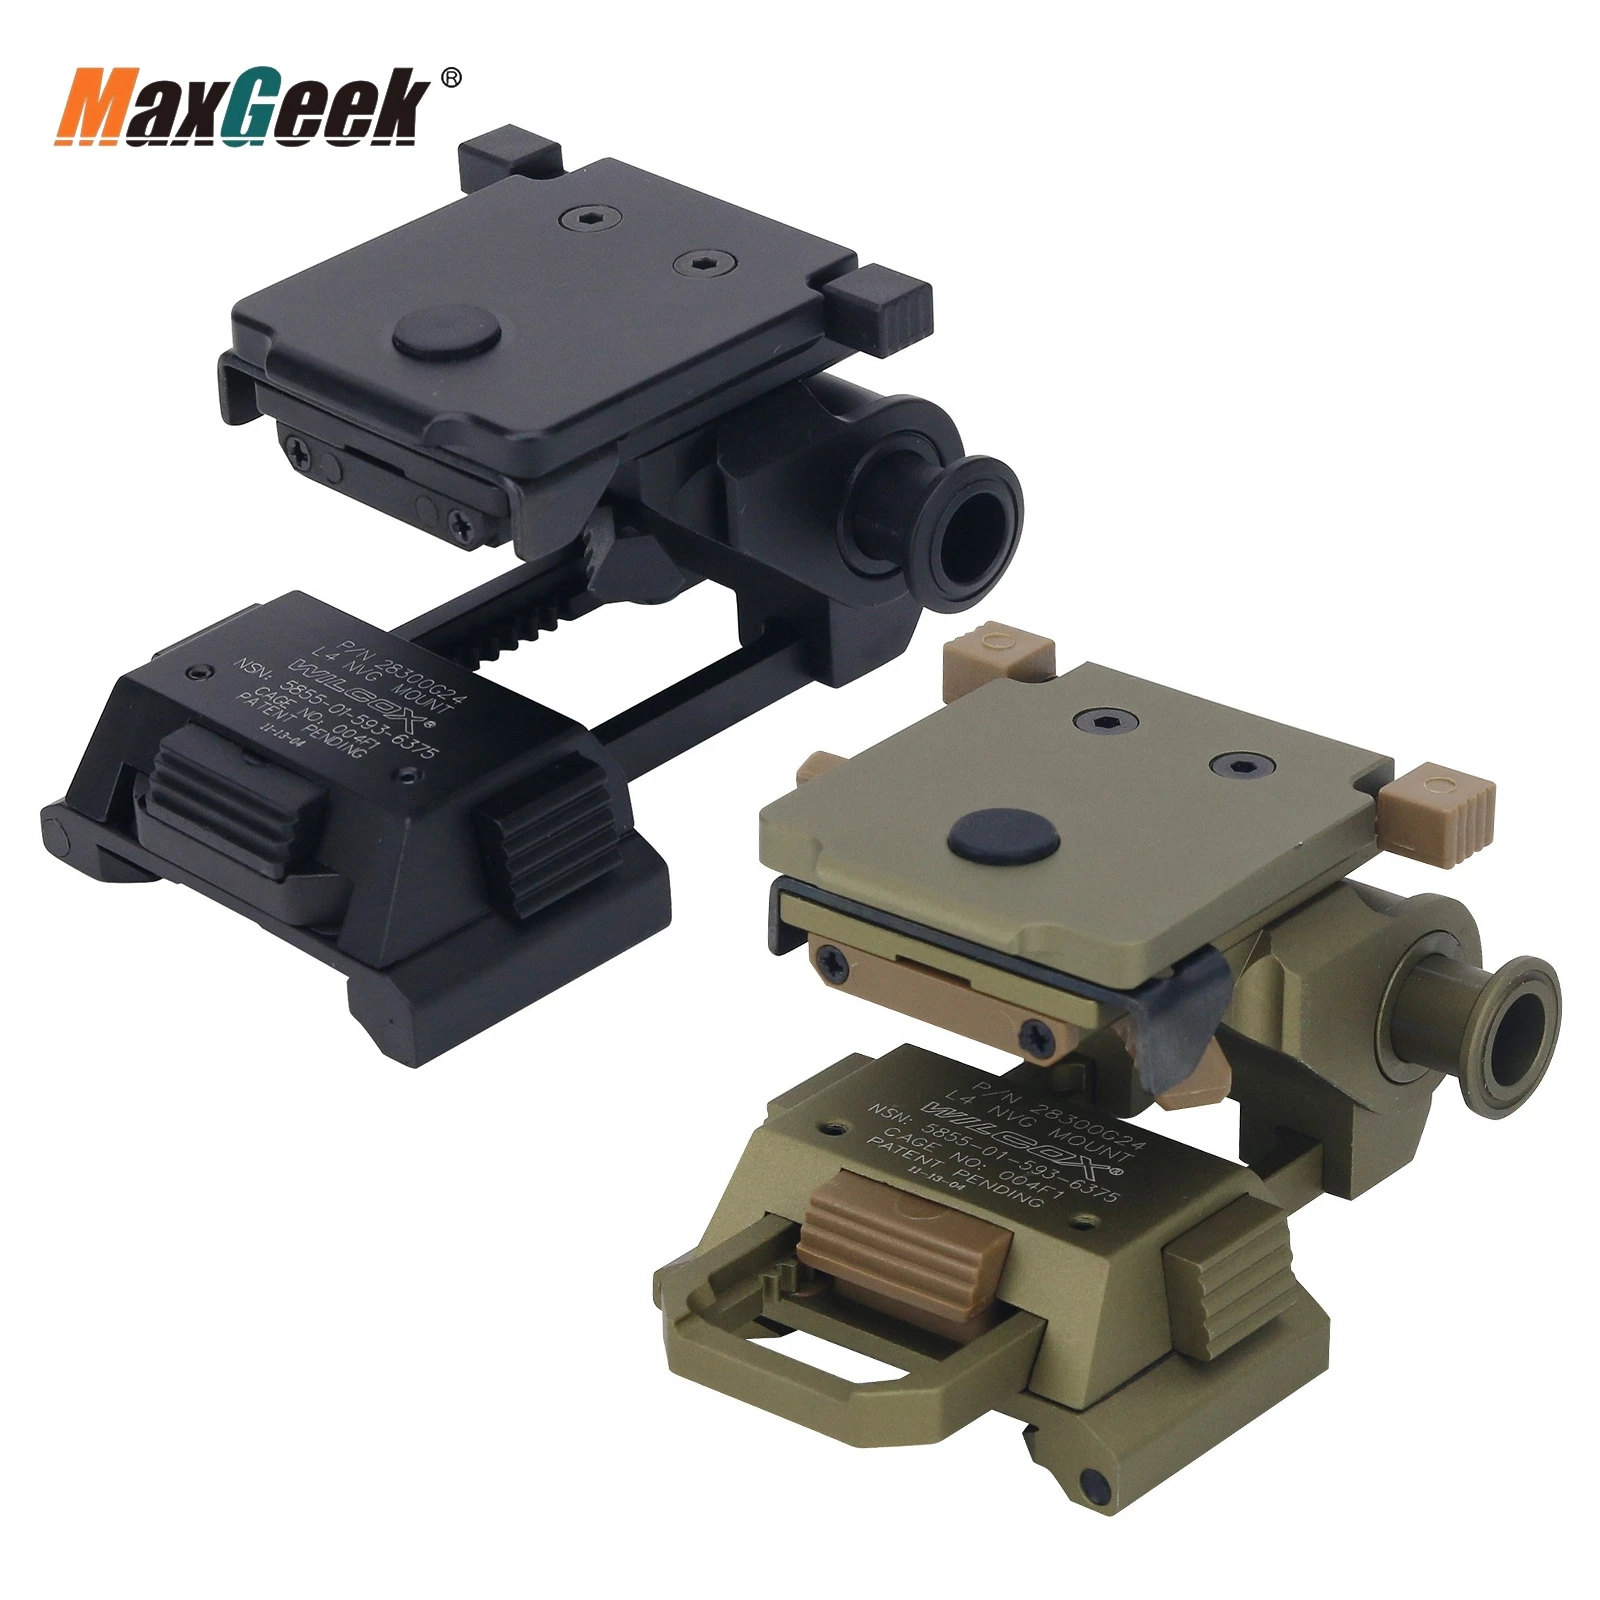 maxgeek-soporte-de-montaje-para-casco-l4g24-nvg-montaje-cnc-pvs15-pvs18-asiento-telescopico-de-vision-nocturna-accesorios-de-desmontaje-rapido